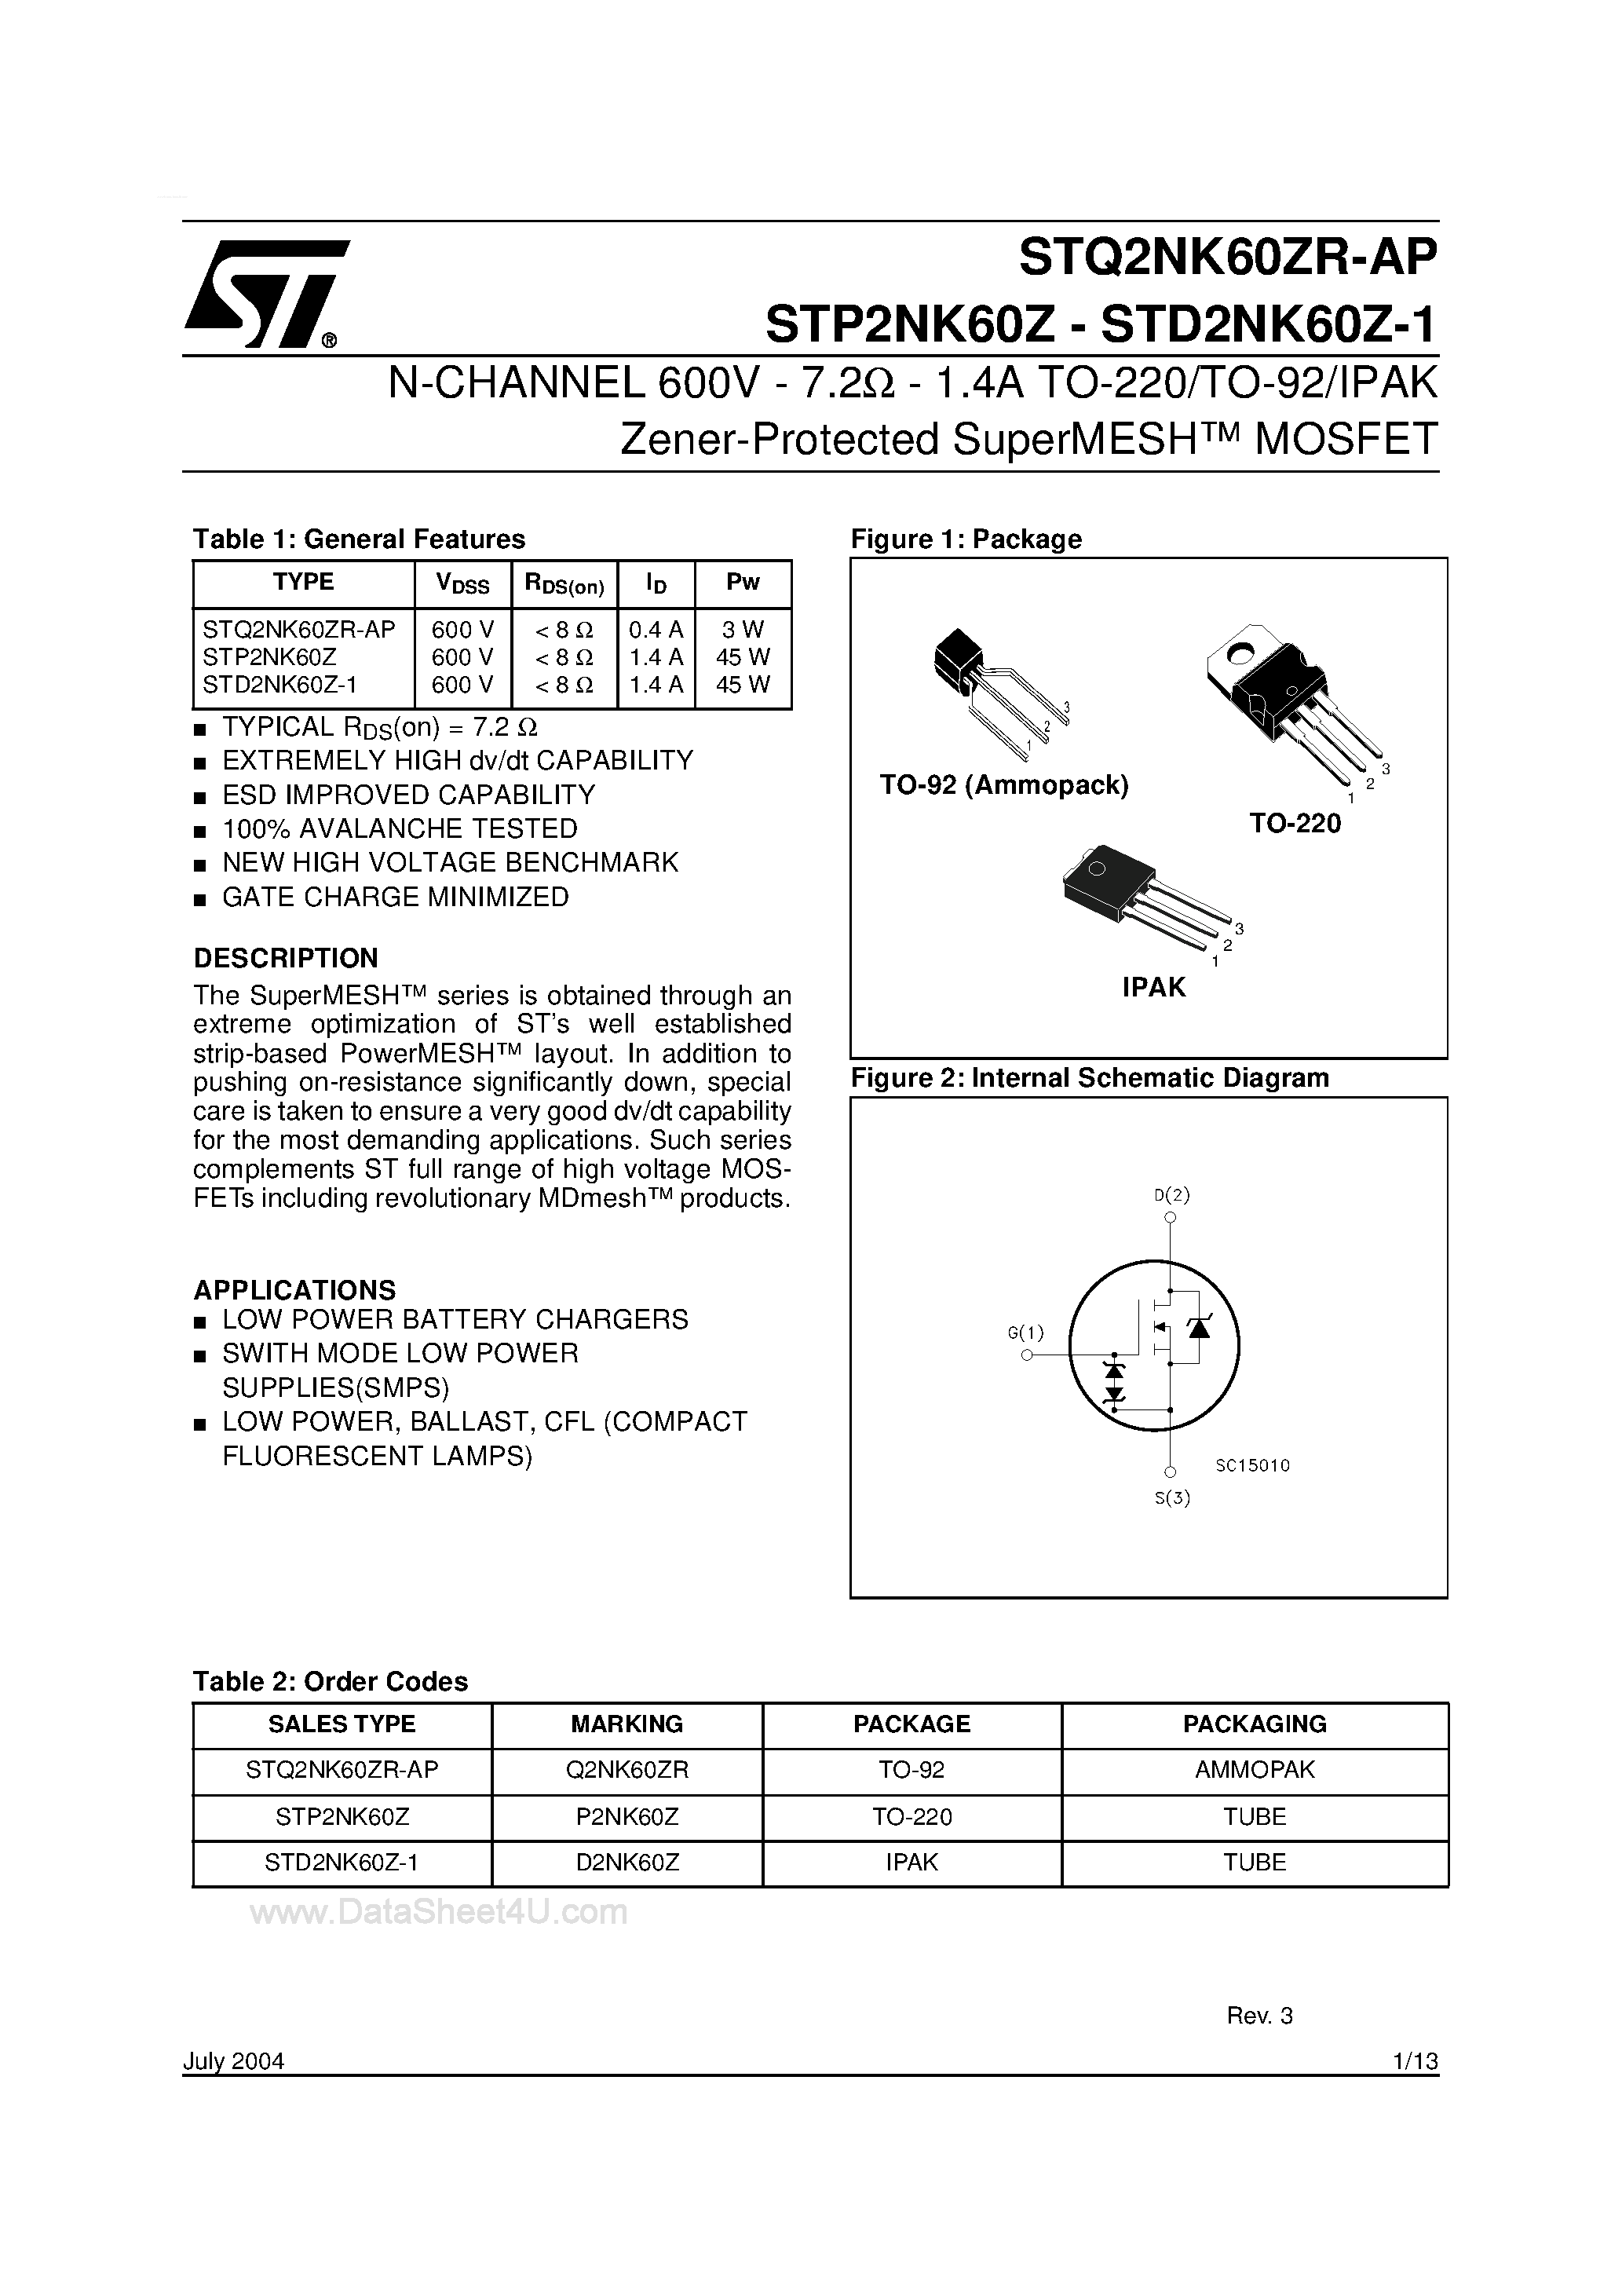 Datasheet STQ2NK60ZR-AP - Zener-Protected SuperMESH MOSFET page 1